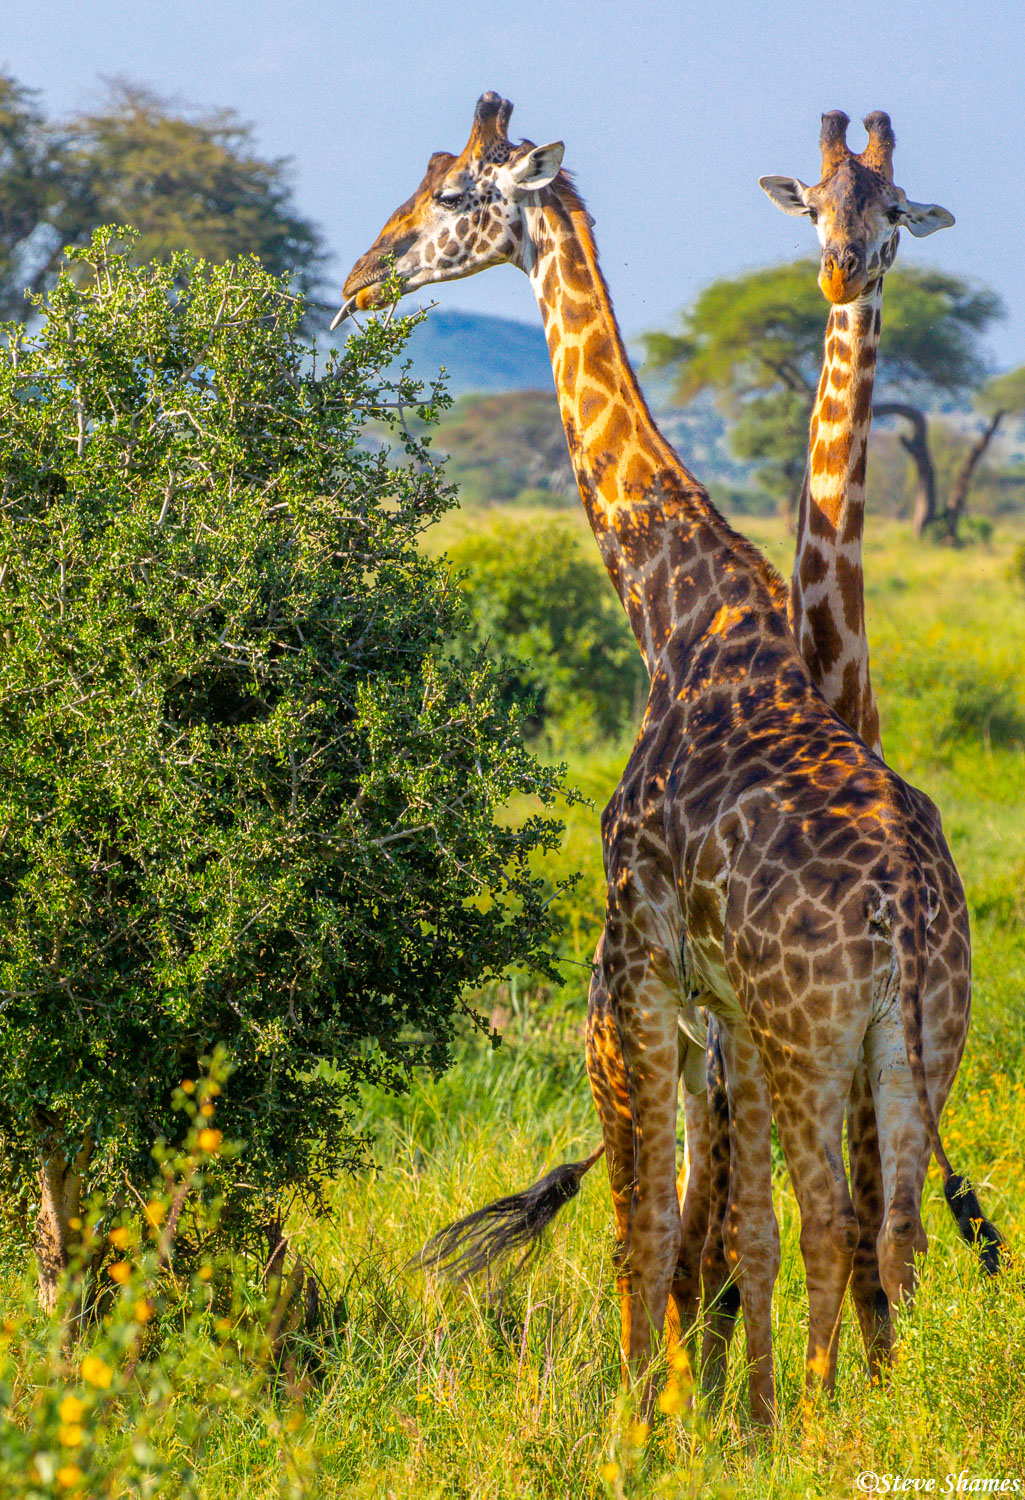 A pair of giraffes eating.